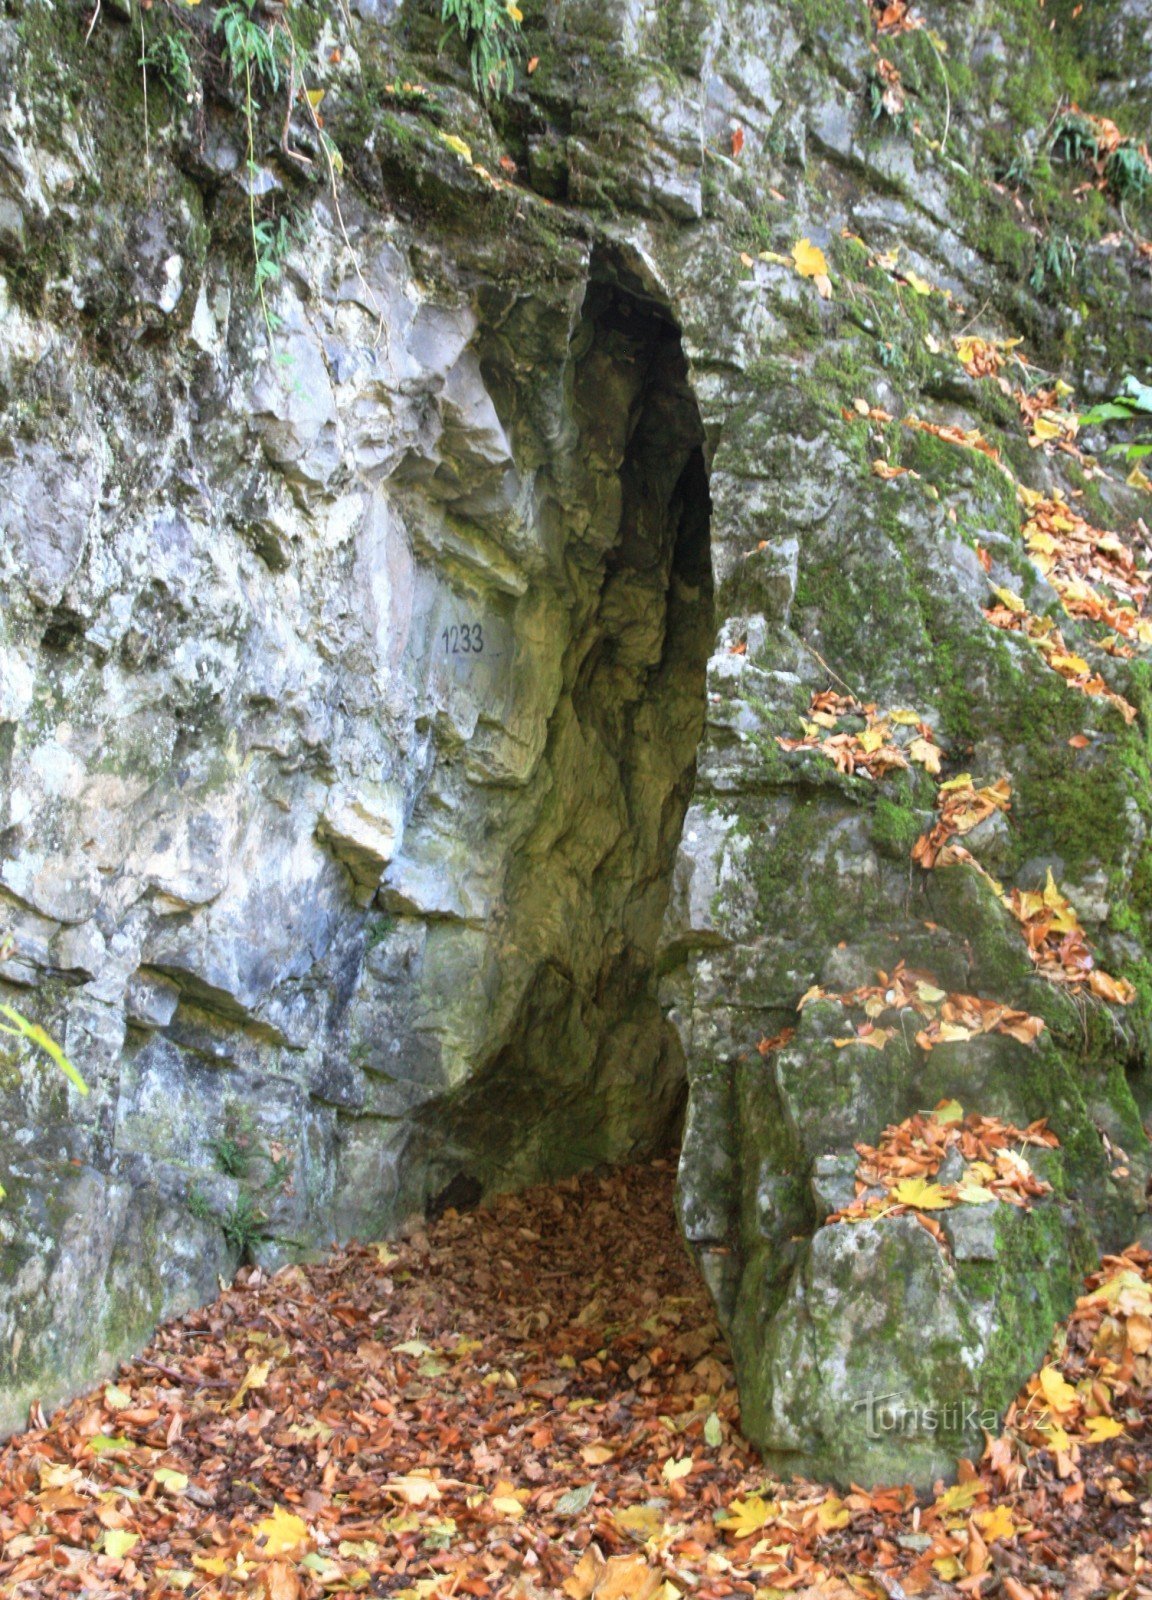 Een van de andere grotten boven Švýcárna in de Josefovské údolí